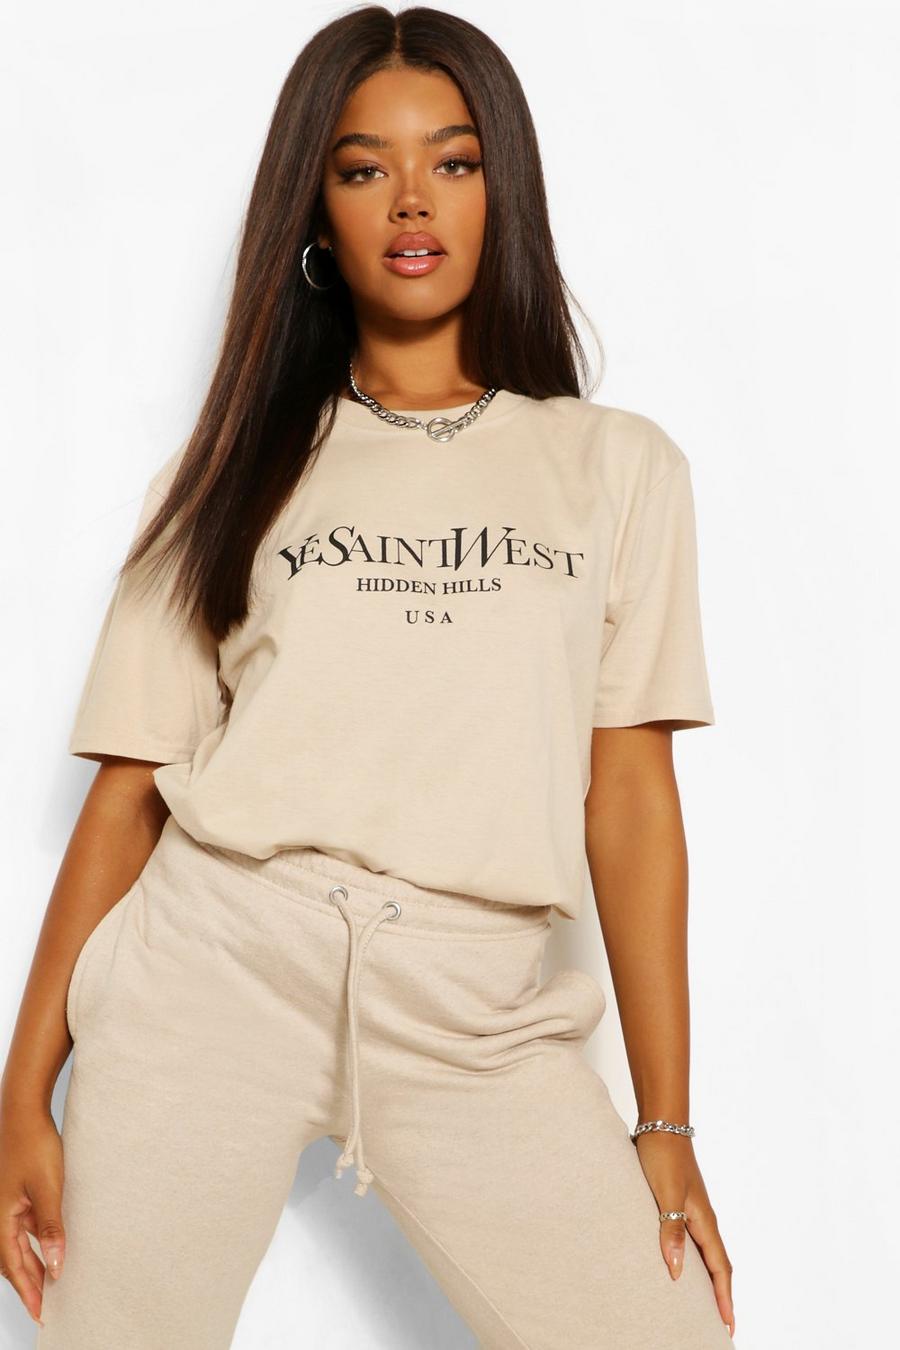 Sand beige 'Ye Saint West' Oversize t-shirt